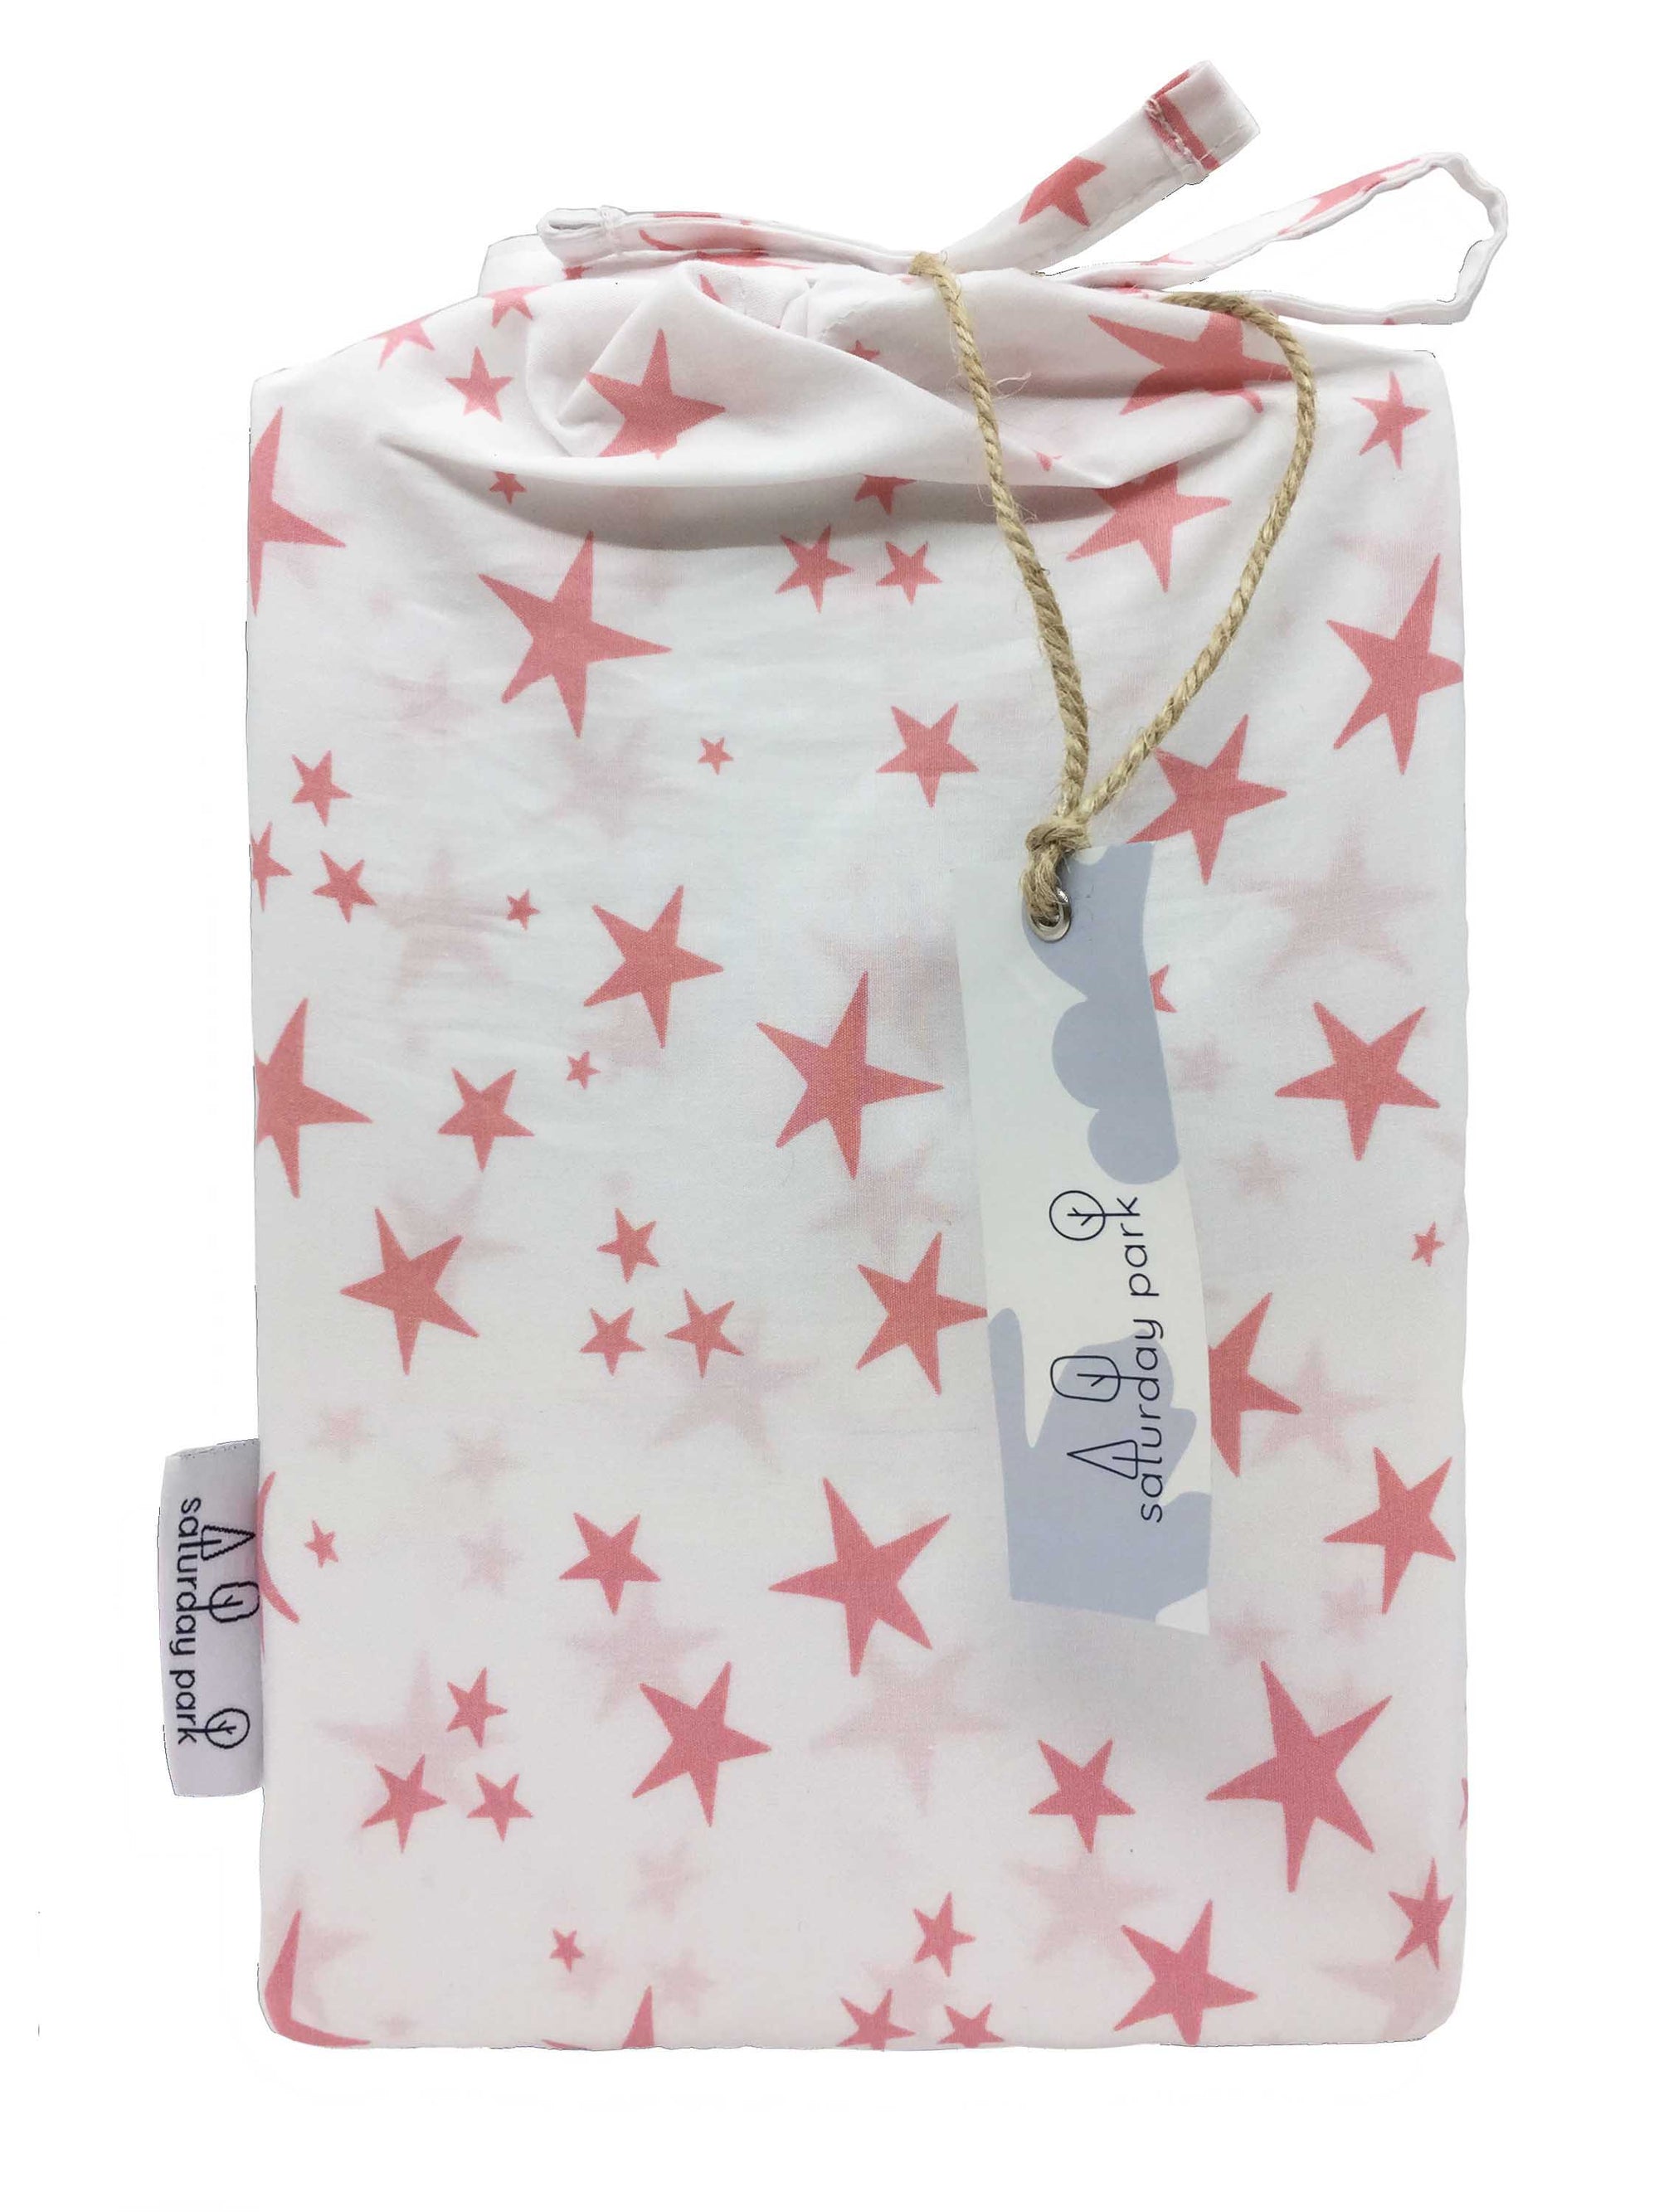 Saturday Park Pink Stars 100% Organic Cotton Pillowcase